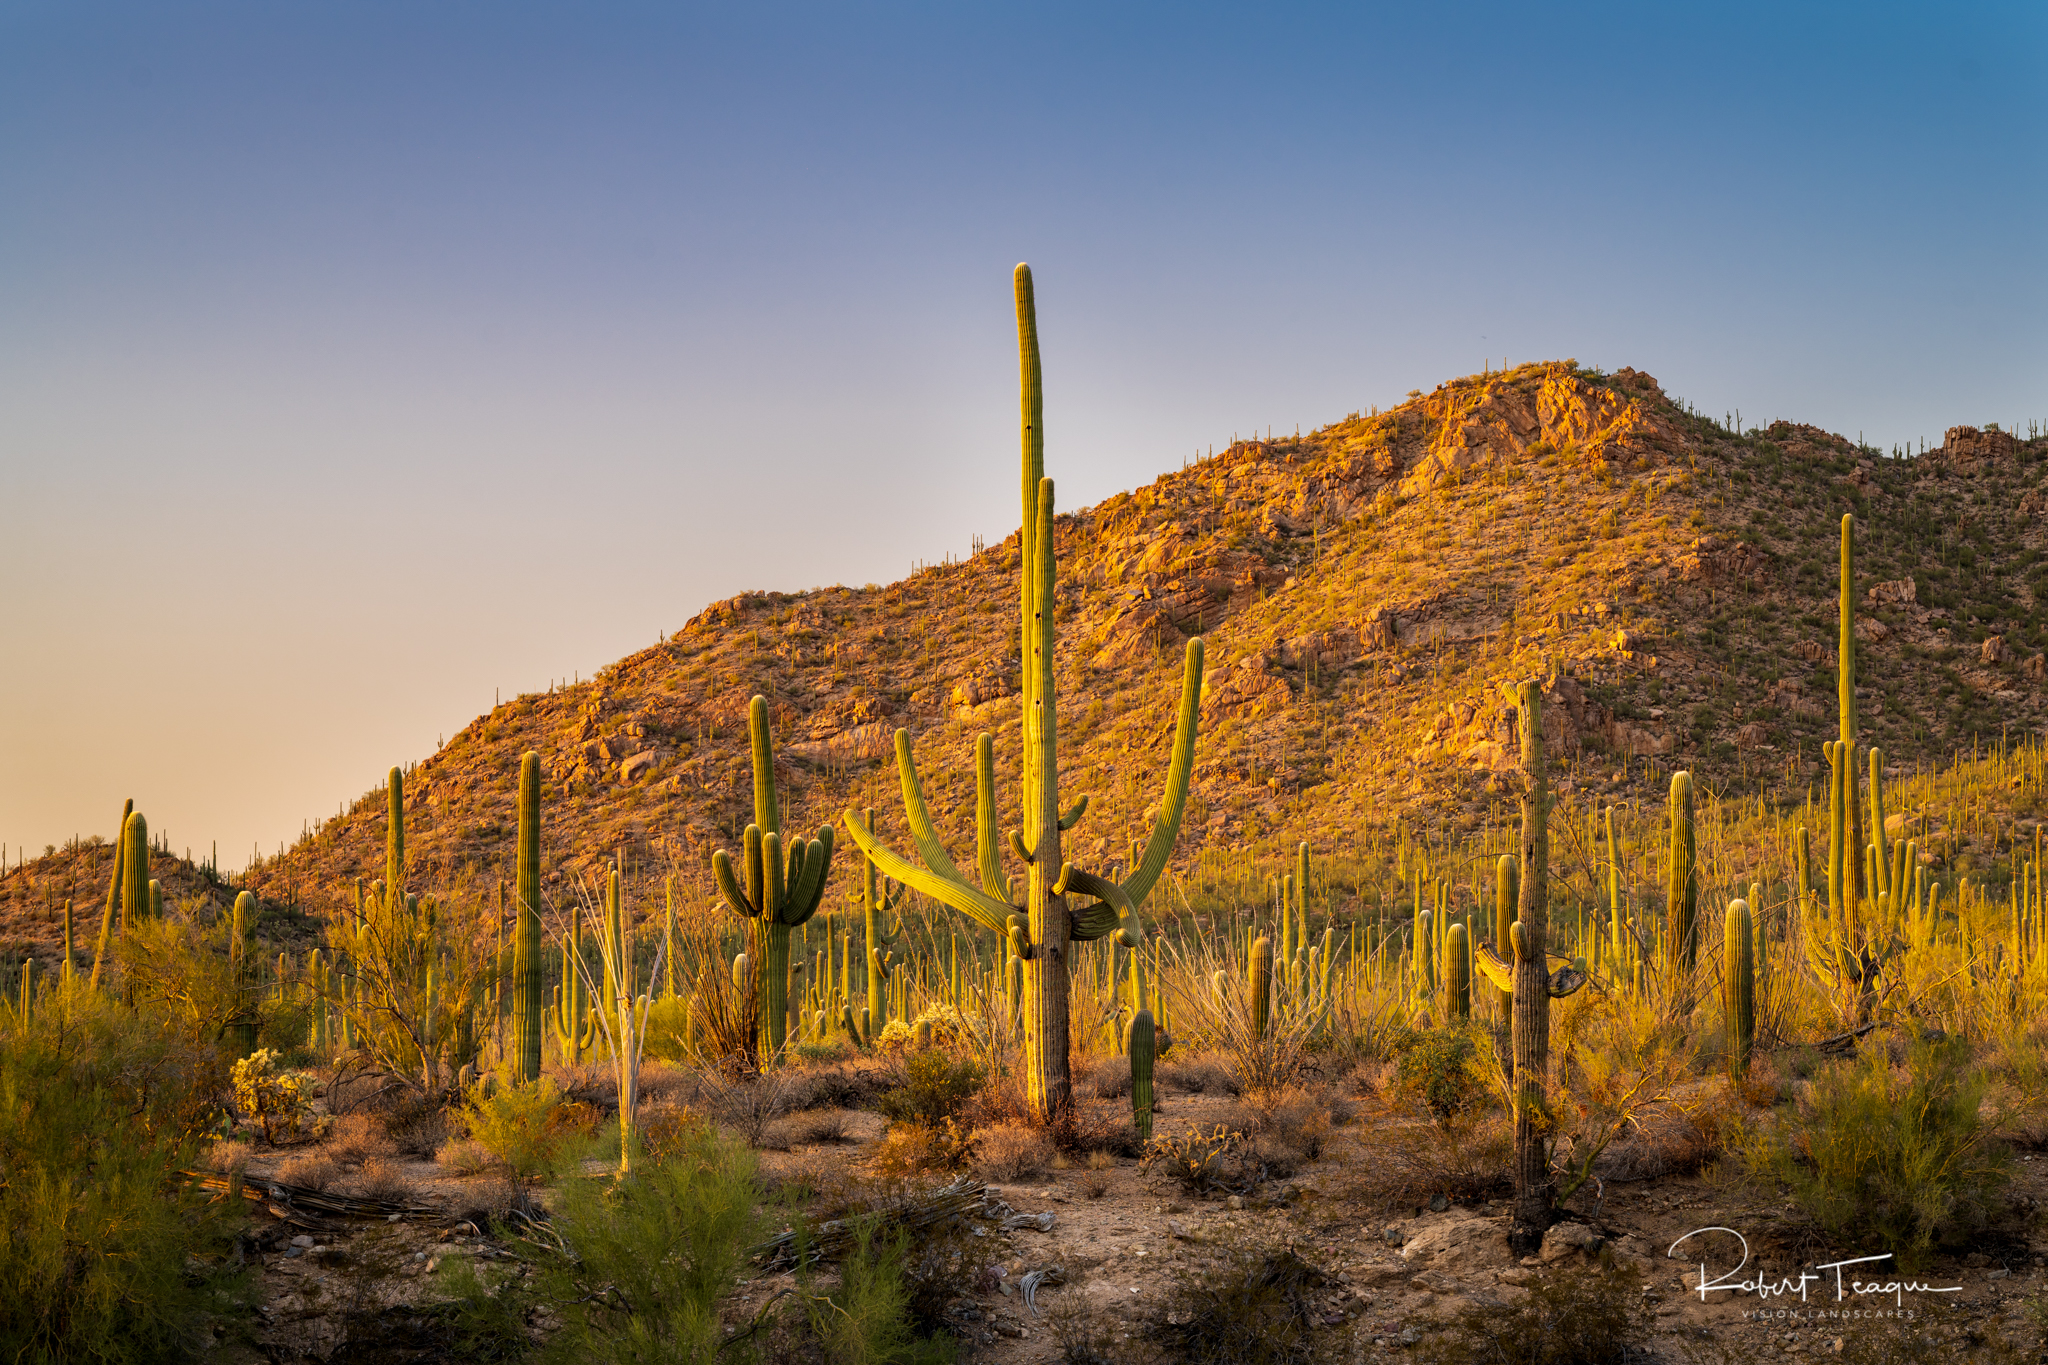 Late Afternoon, Sonoran Desert at Saguaro National Park, Arizona